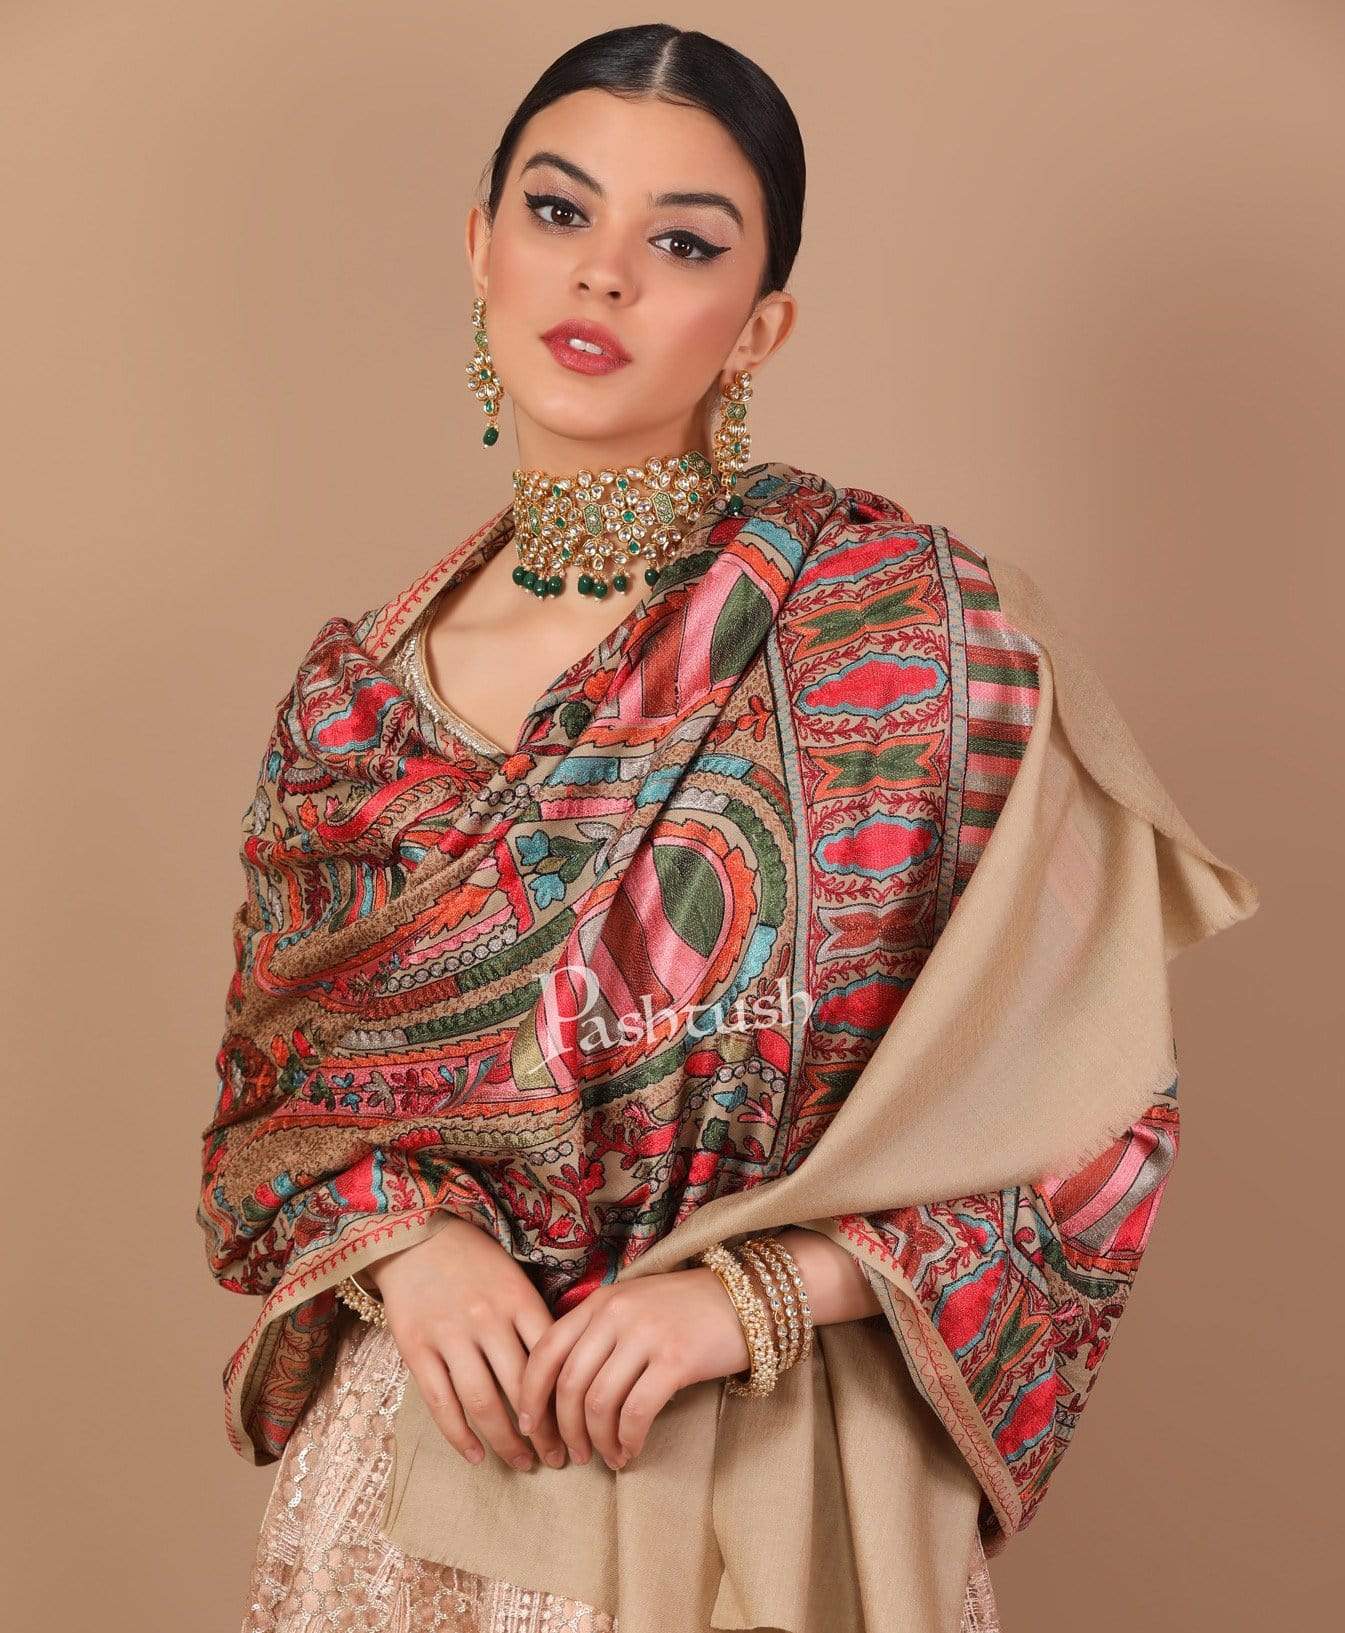 Pashtush Shawl Store Stole Pashtush Tres Chic Regal Collection, Wool Embroidery Nalki Shawl Scarf, Rich Black